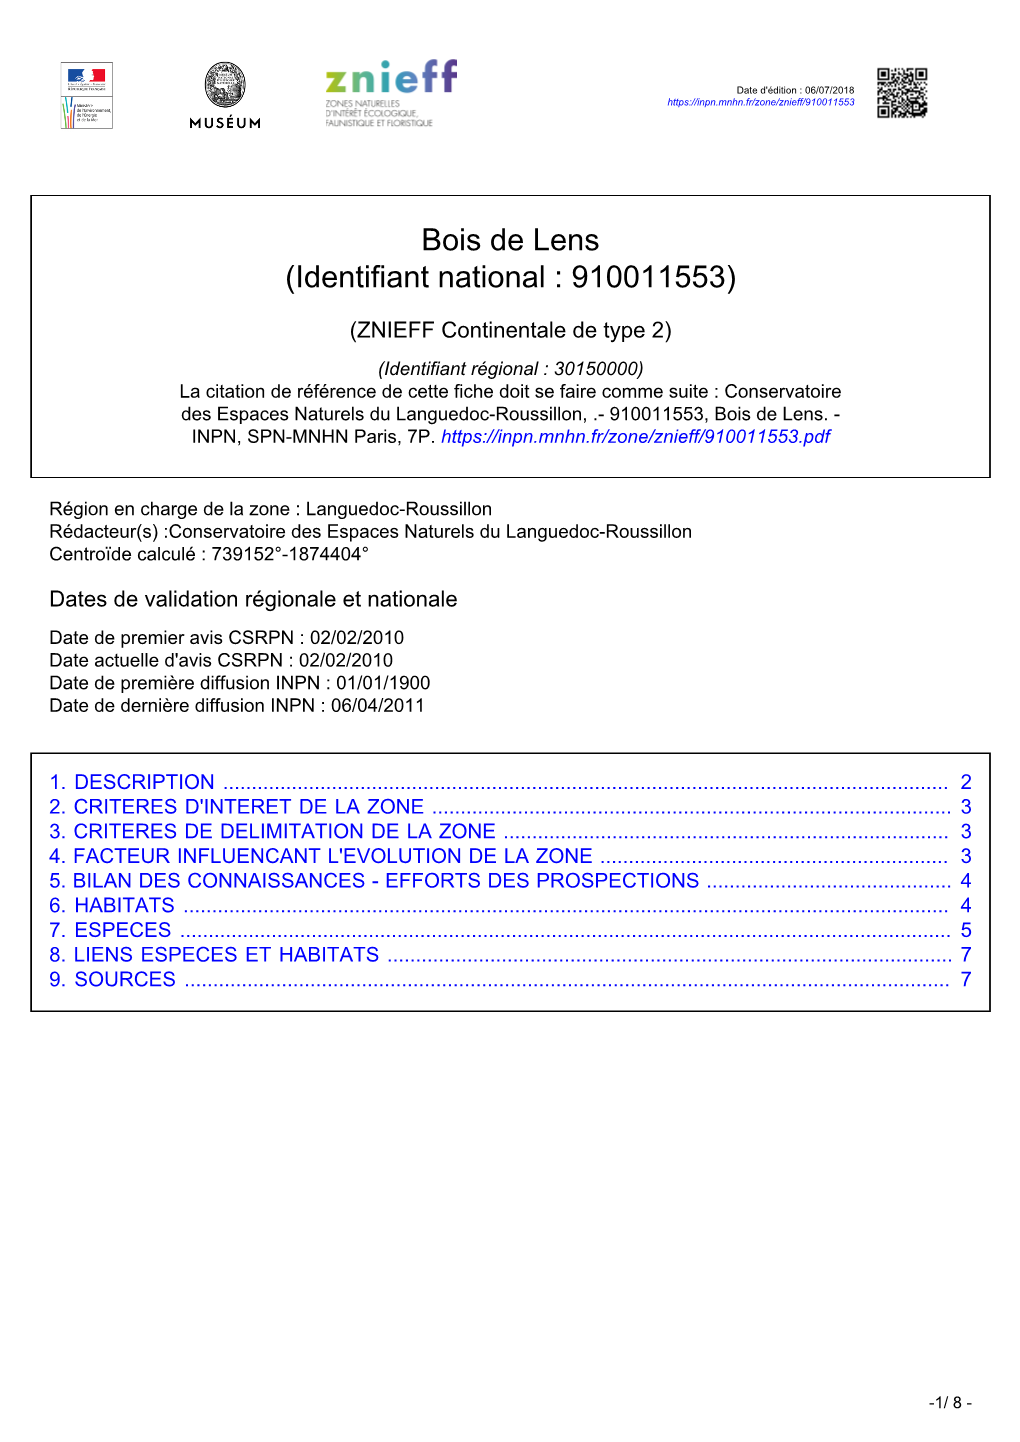 Bois De Lens (Identifiant National : 910011553)